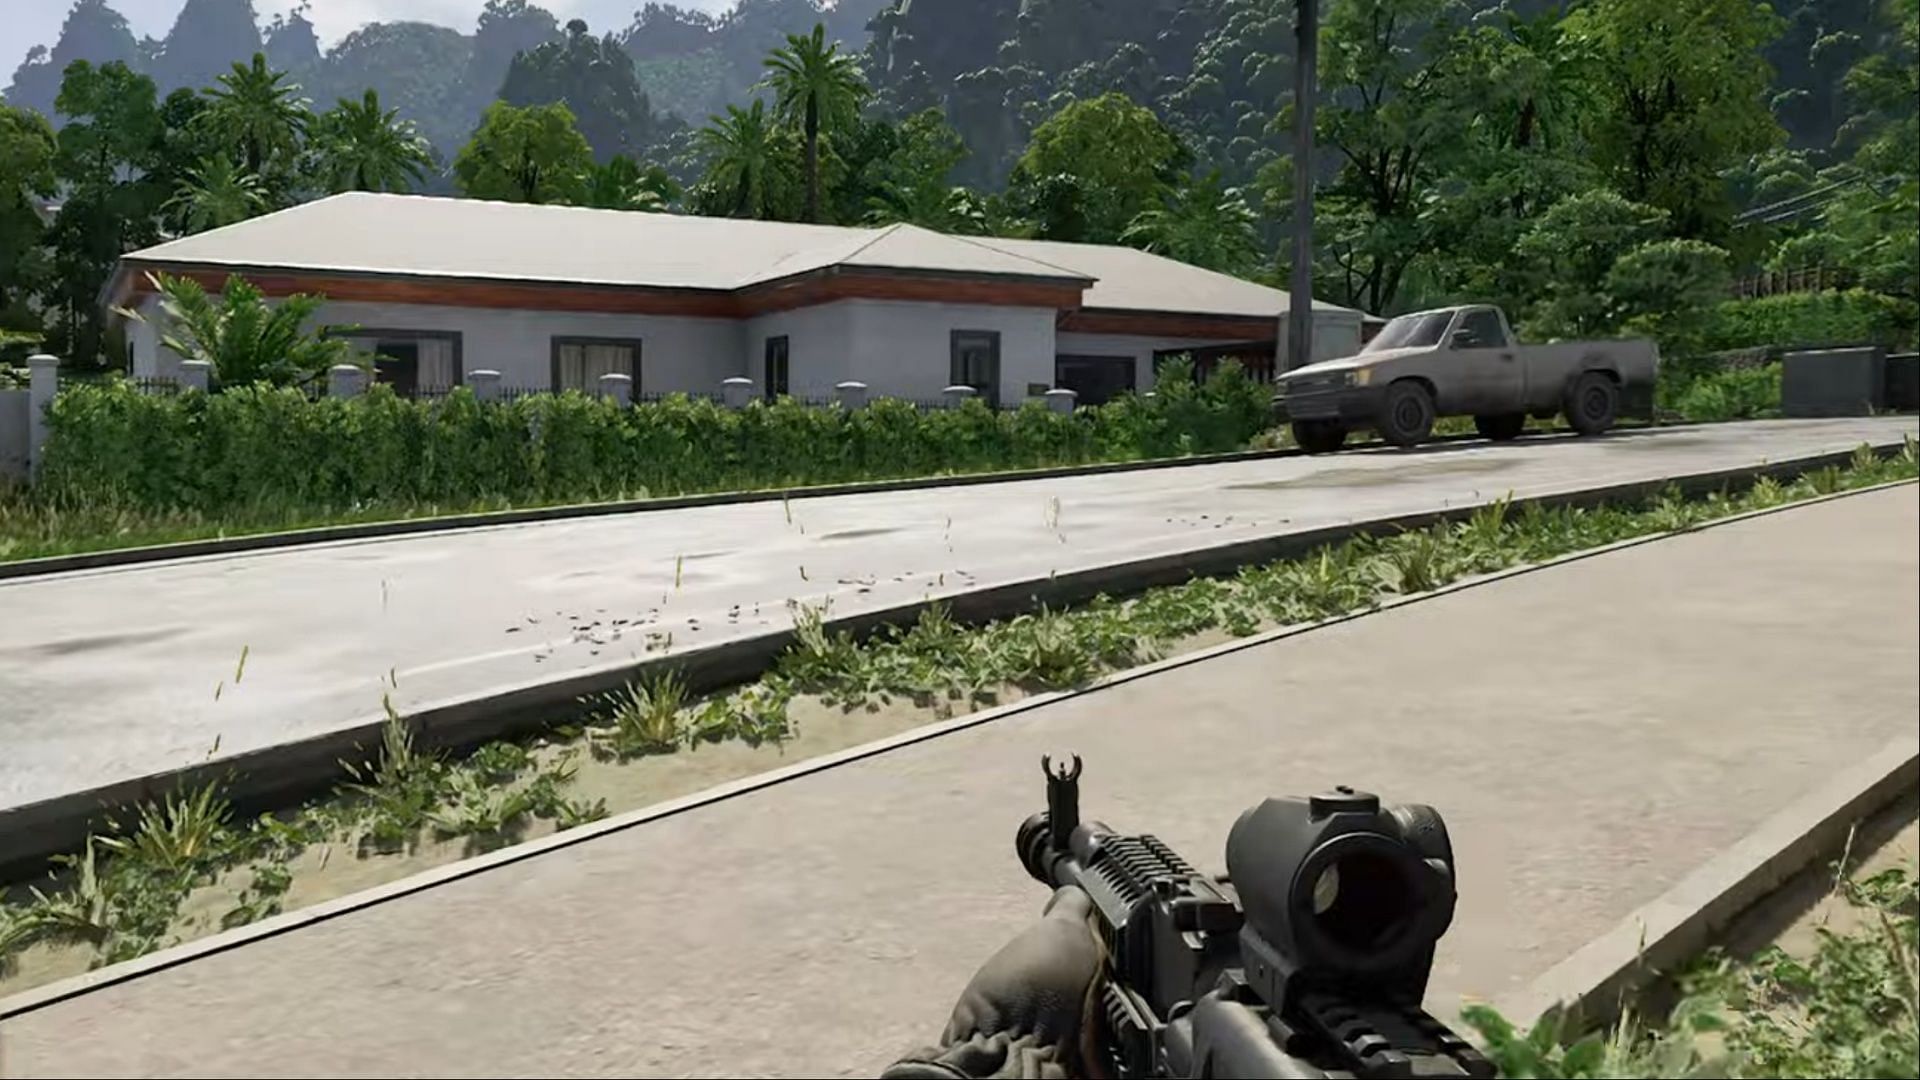 Mission location for The Congressman in Gray Zone Warfare (Image via Madfinger Games)